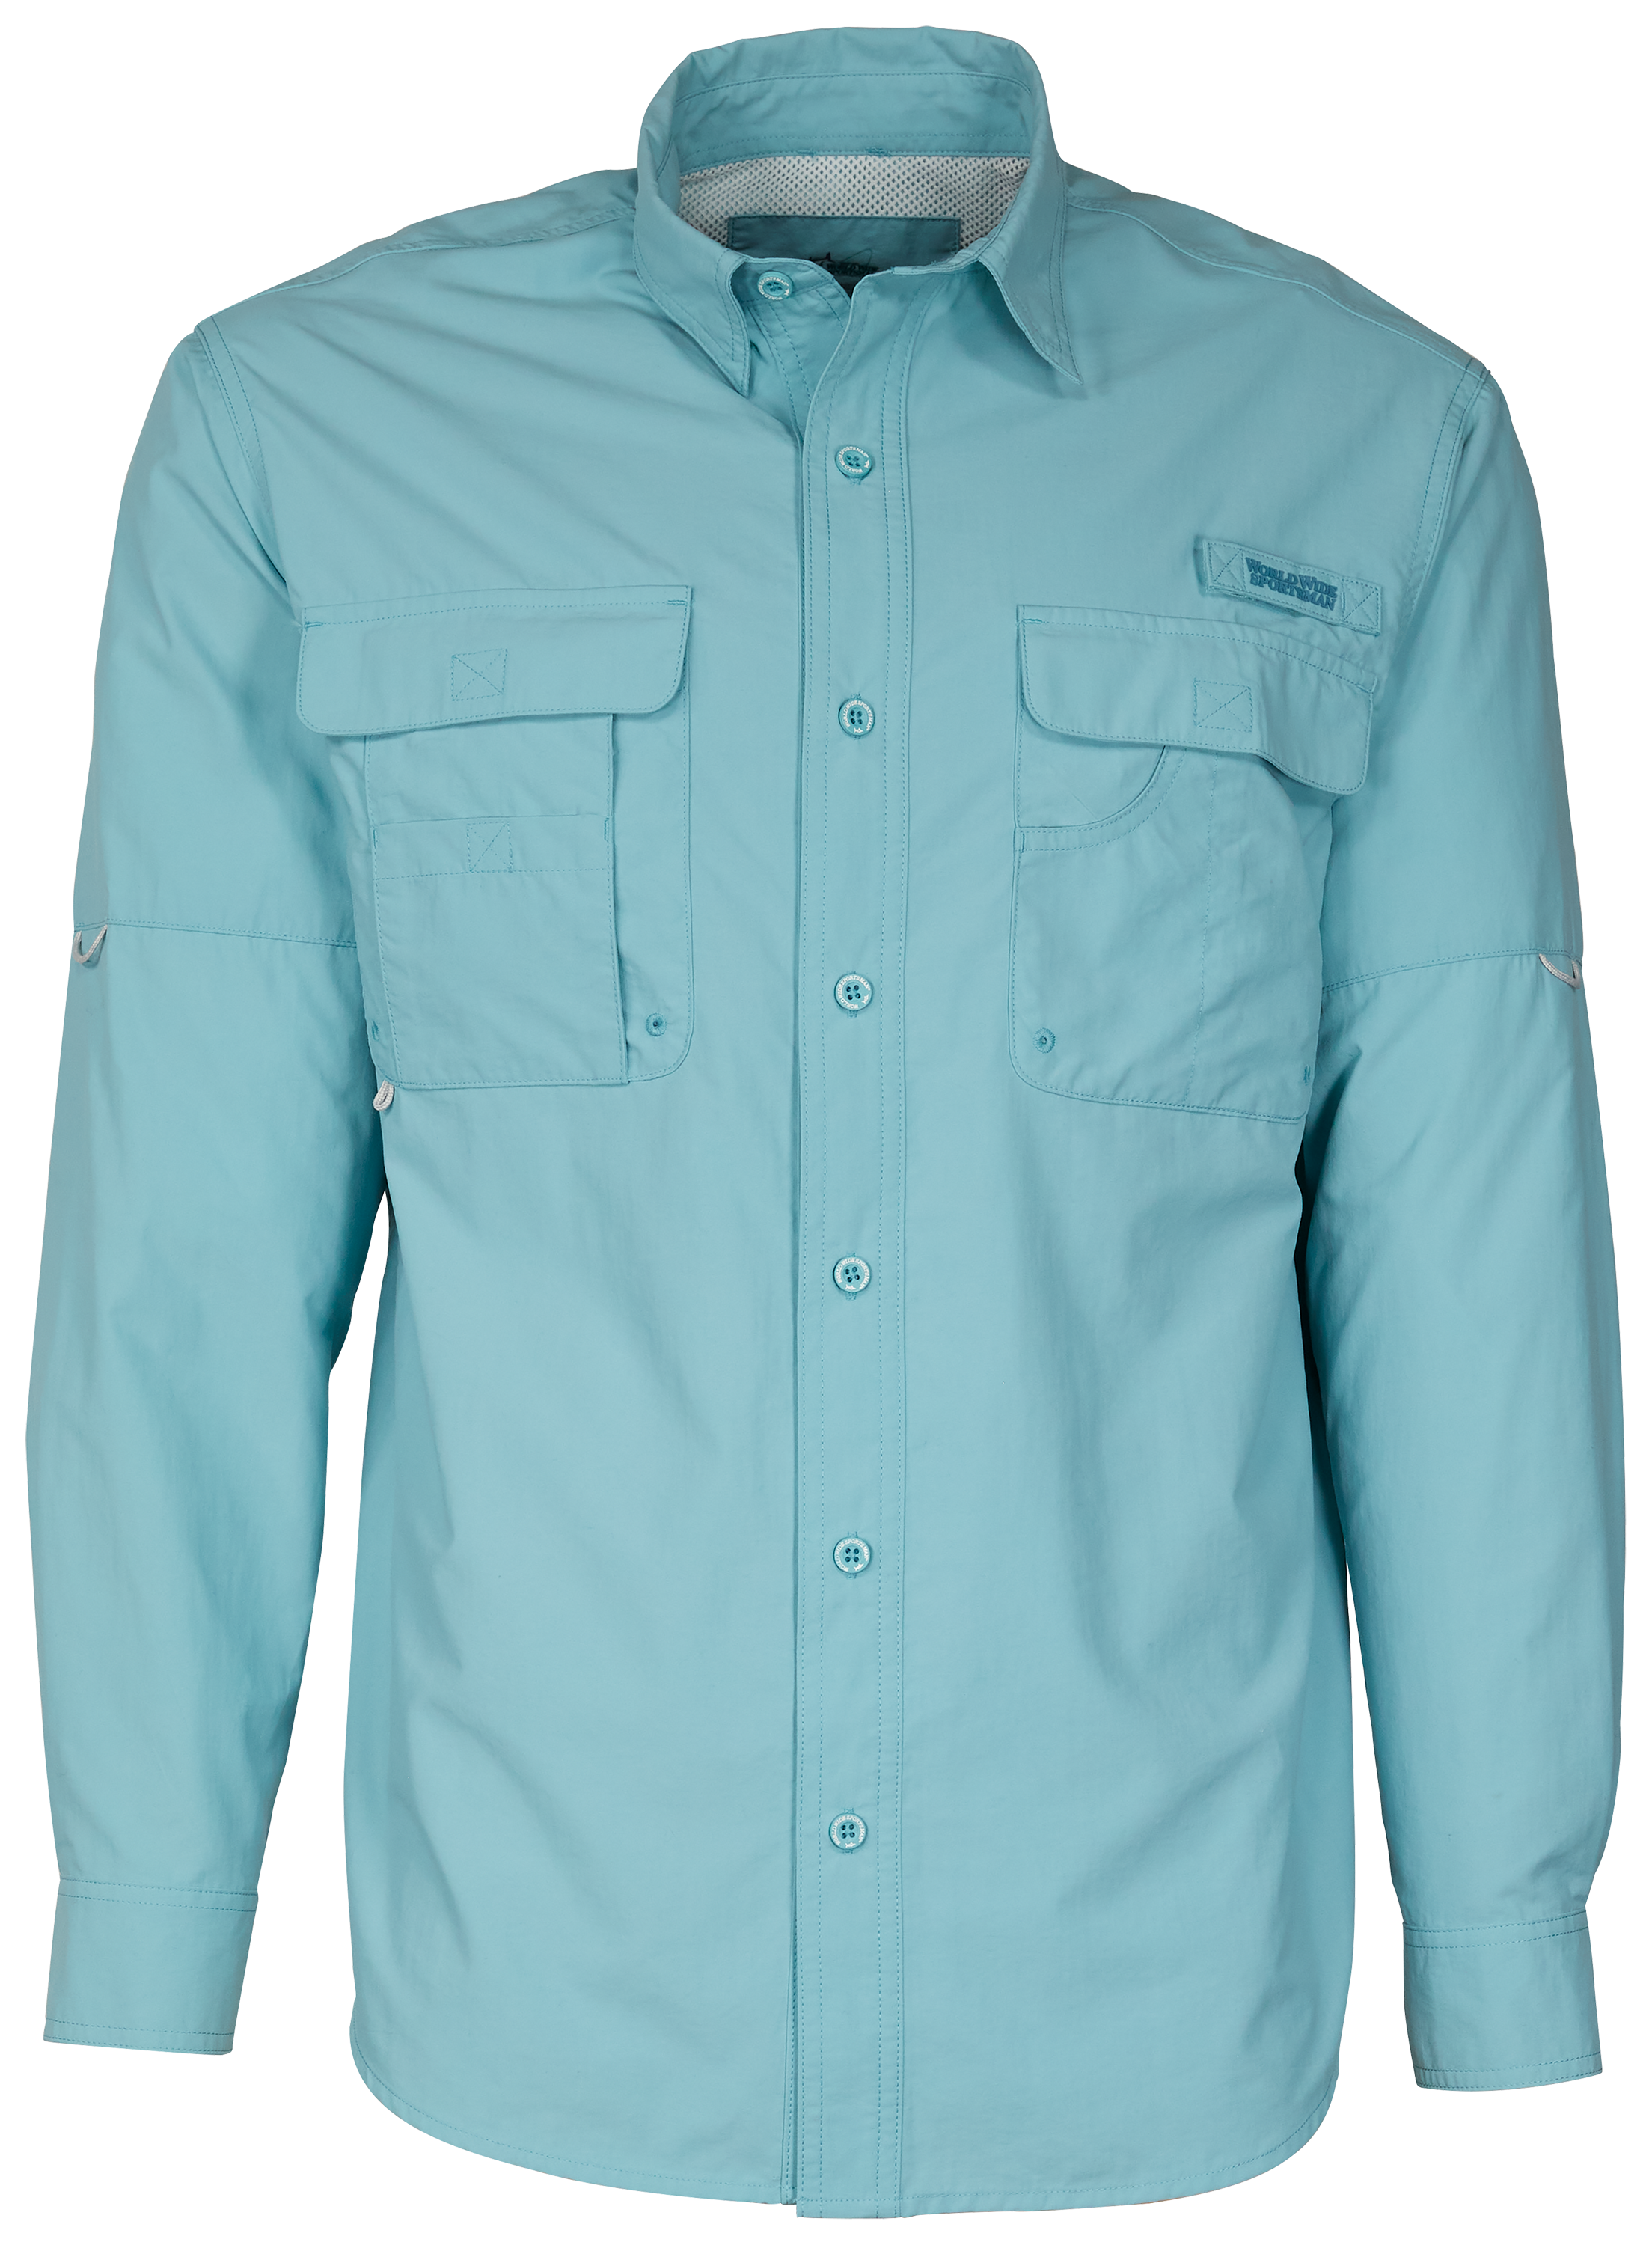 Simms Fishing Shirt Men's XXLT 2XLT Blue Long Sleeve Quick Dry